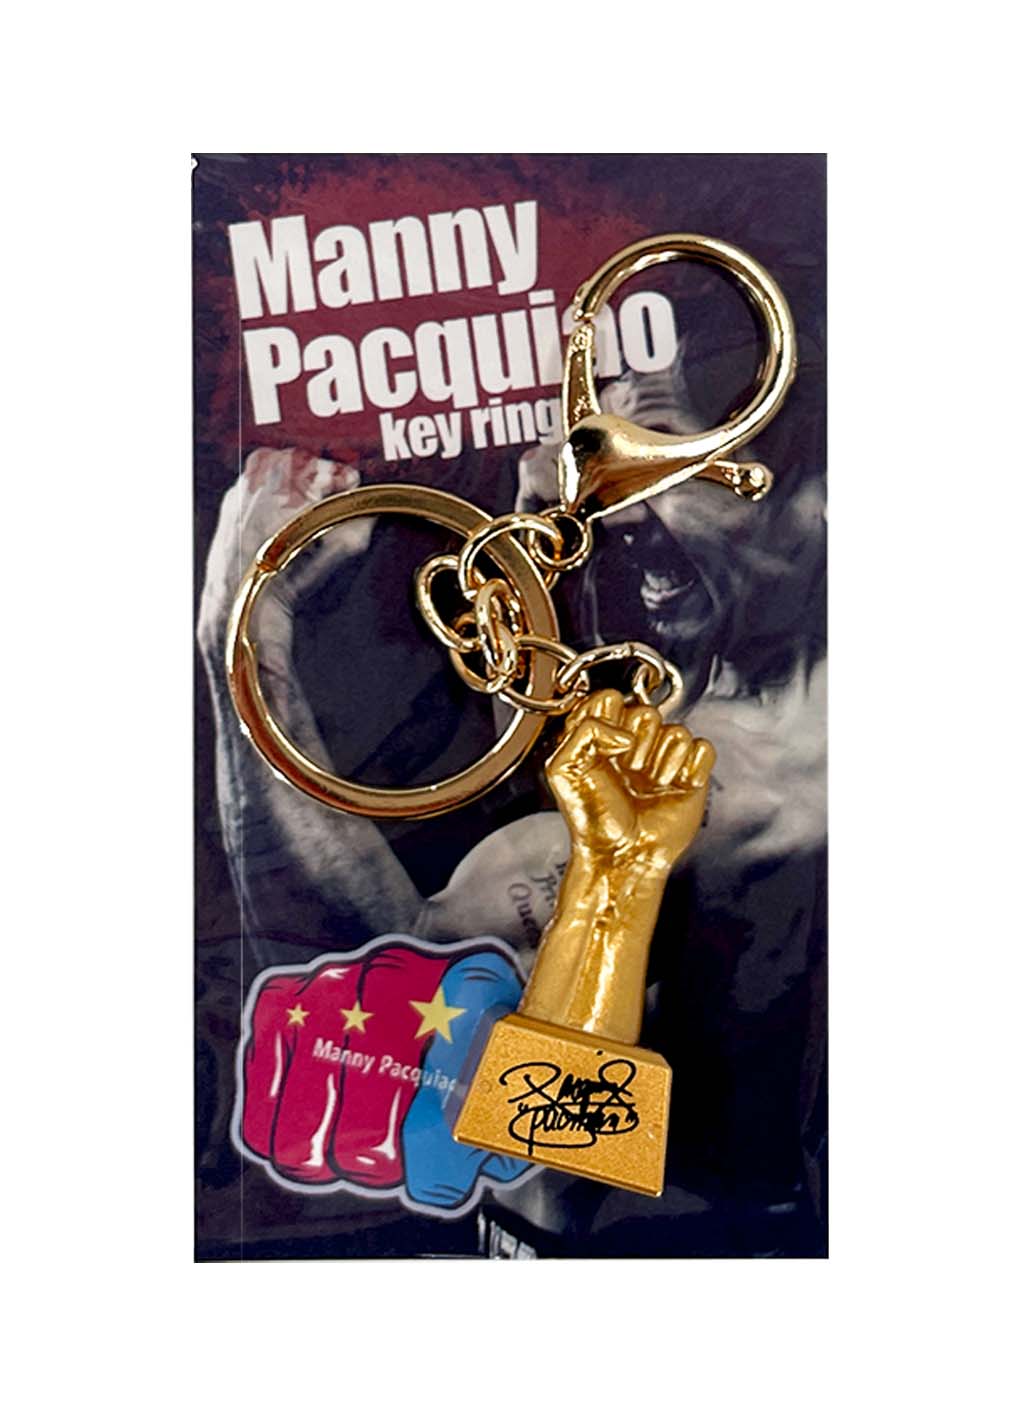 Pacquiao's fist key ring 樹脂製